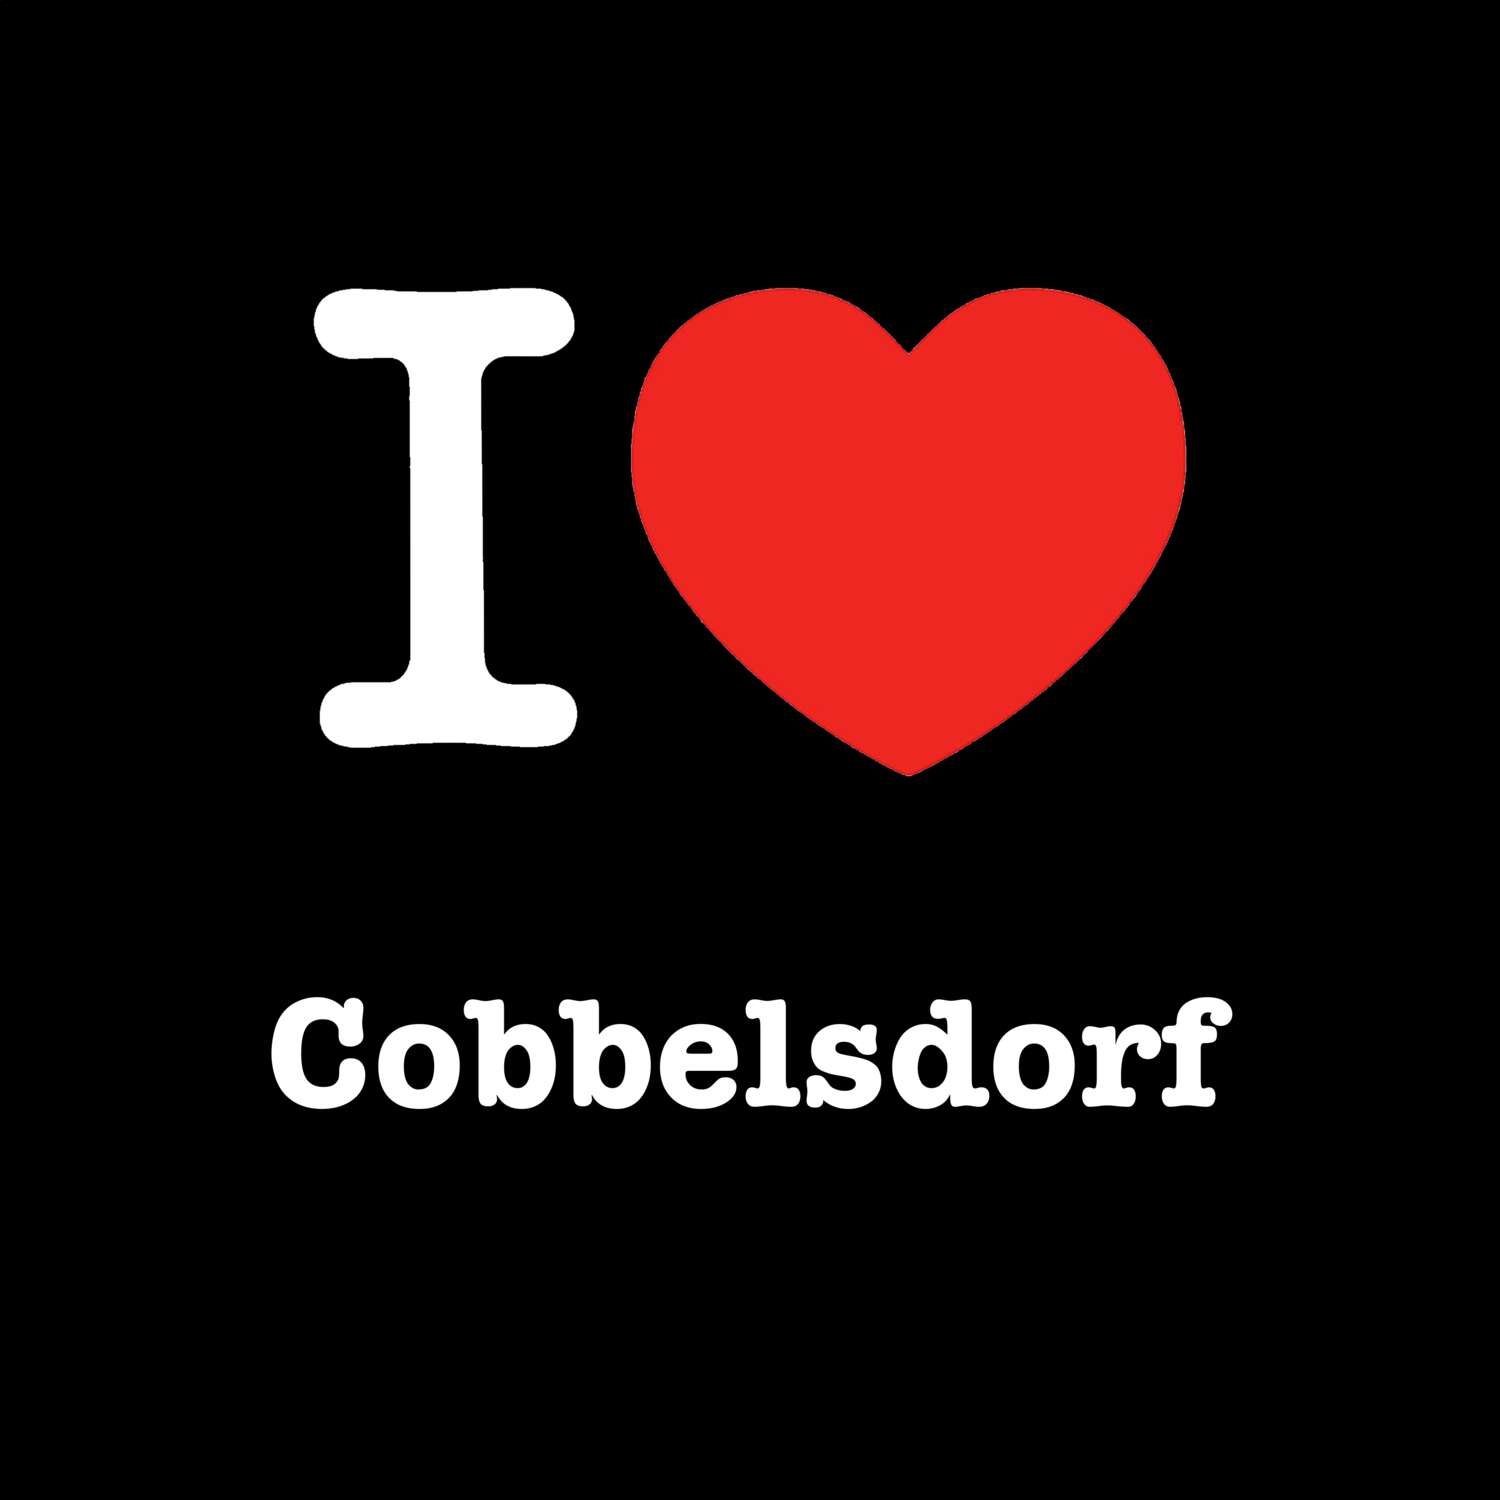 Cobbelsdorf T-Shirt »I love«